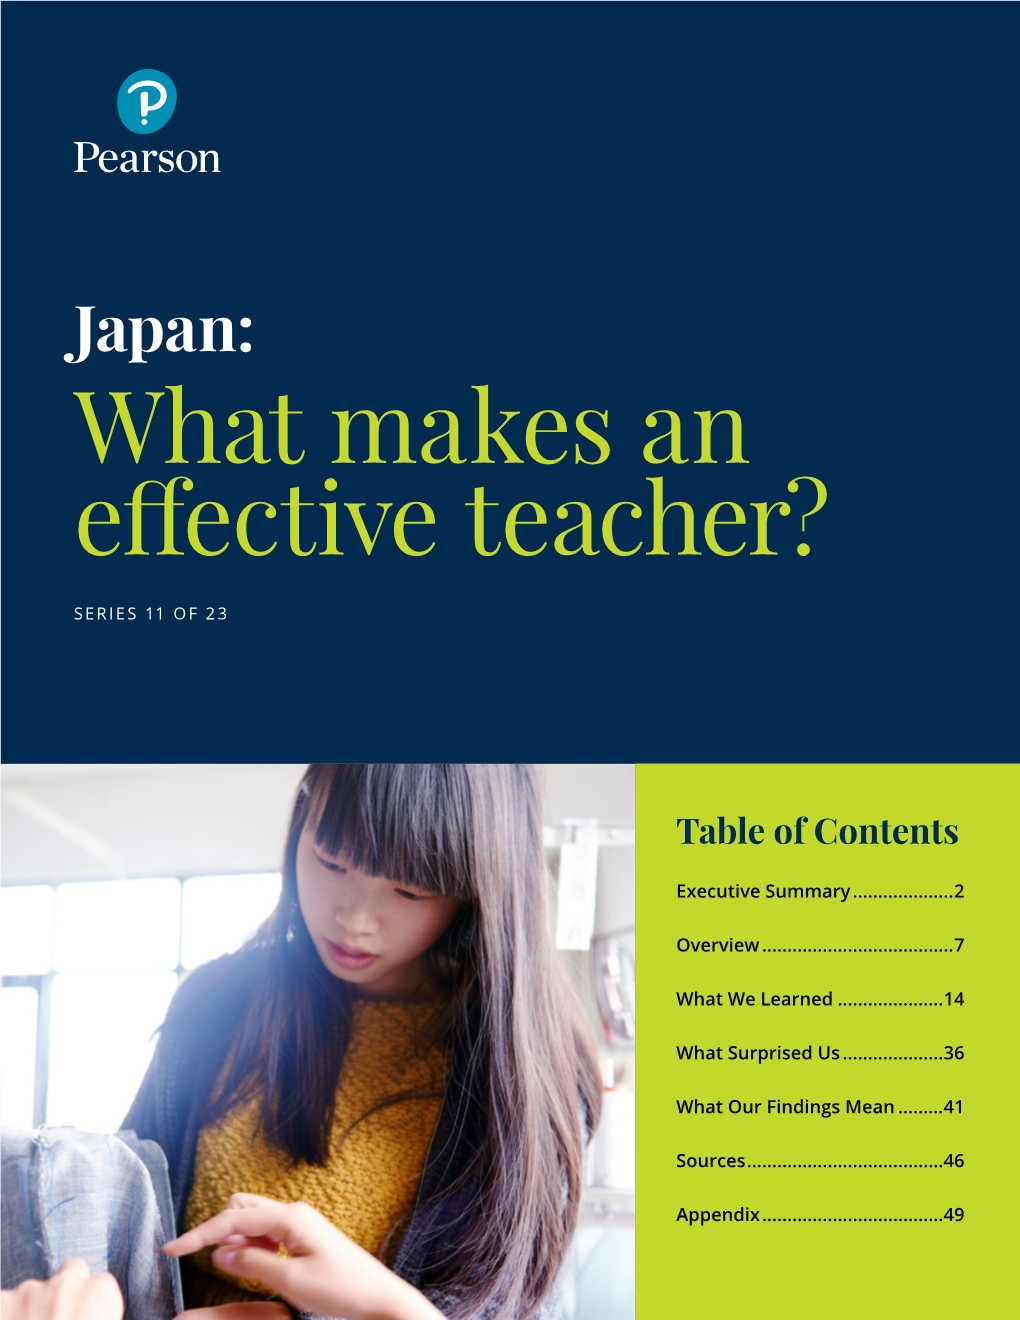 Japan: What Makes an Effective Teacher?